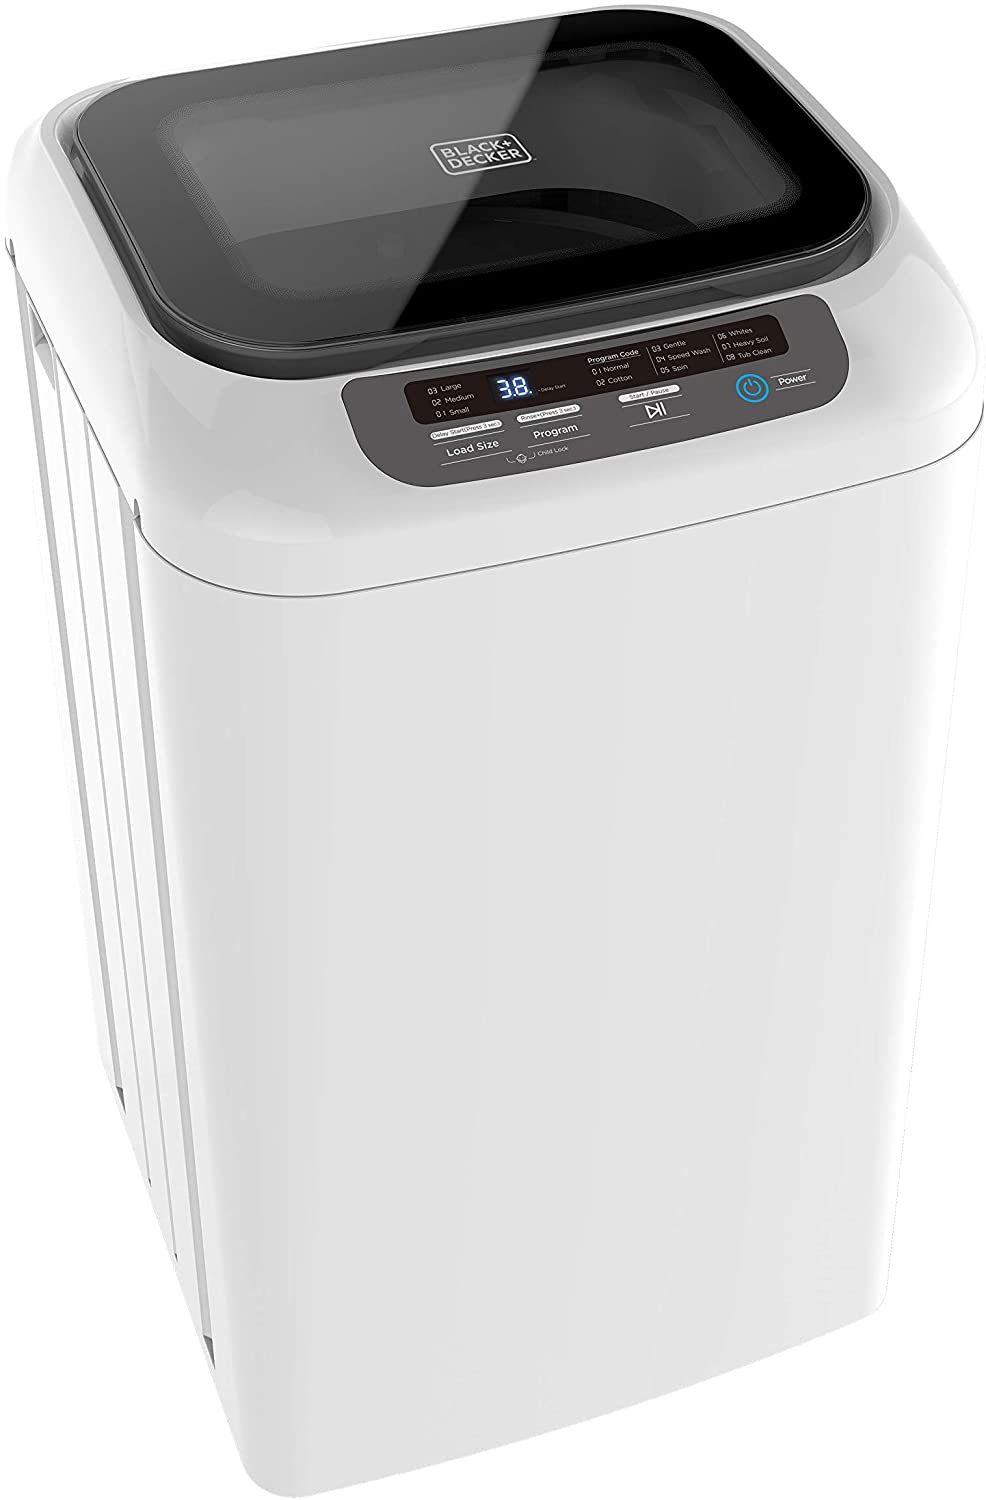 Black+Decker Portable Washing Machines Reviewed